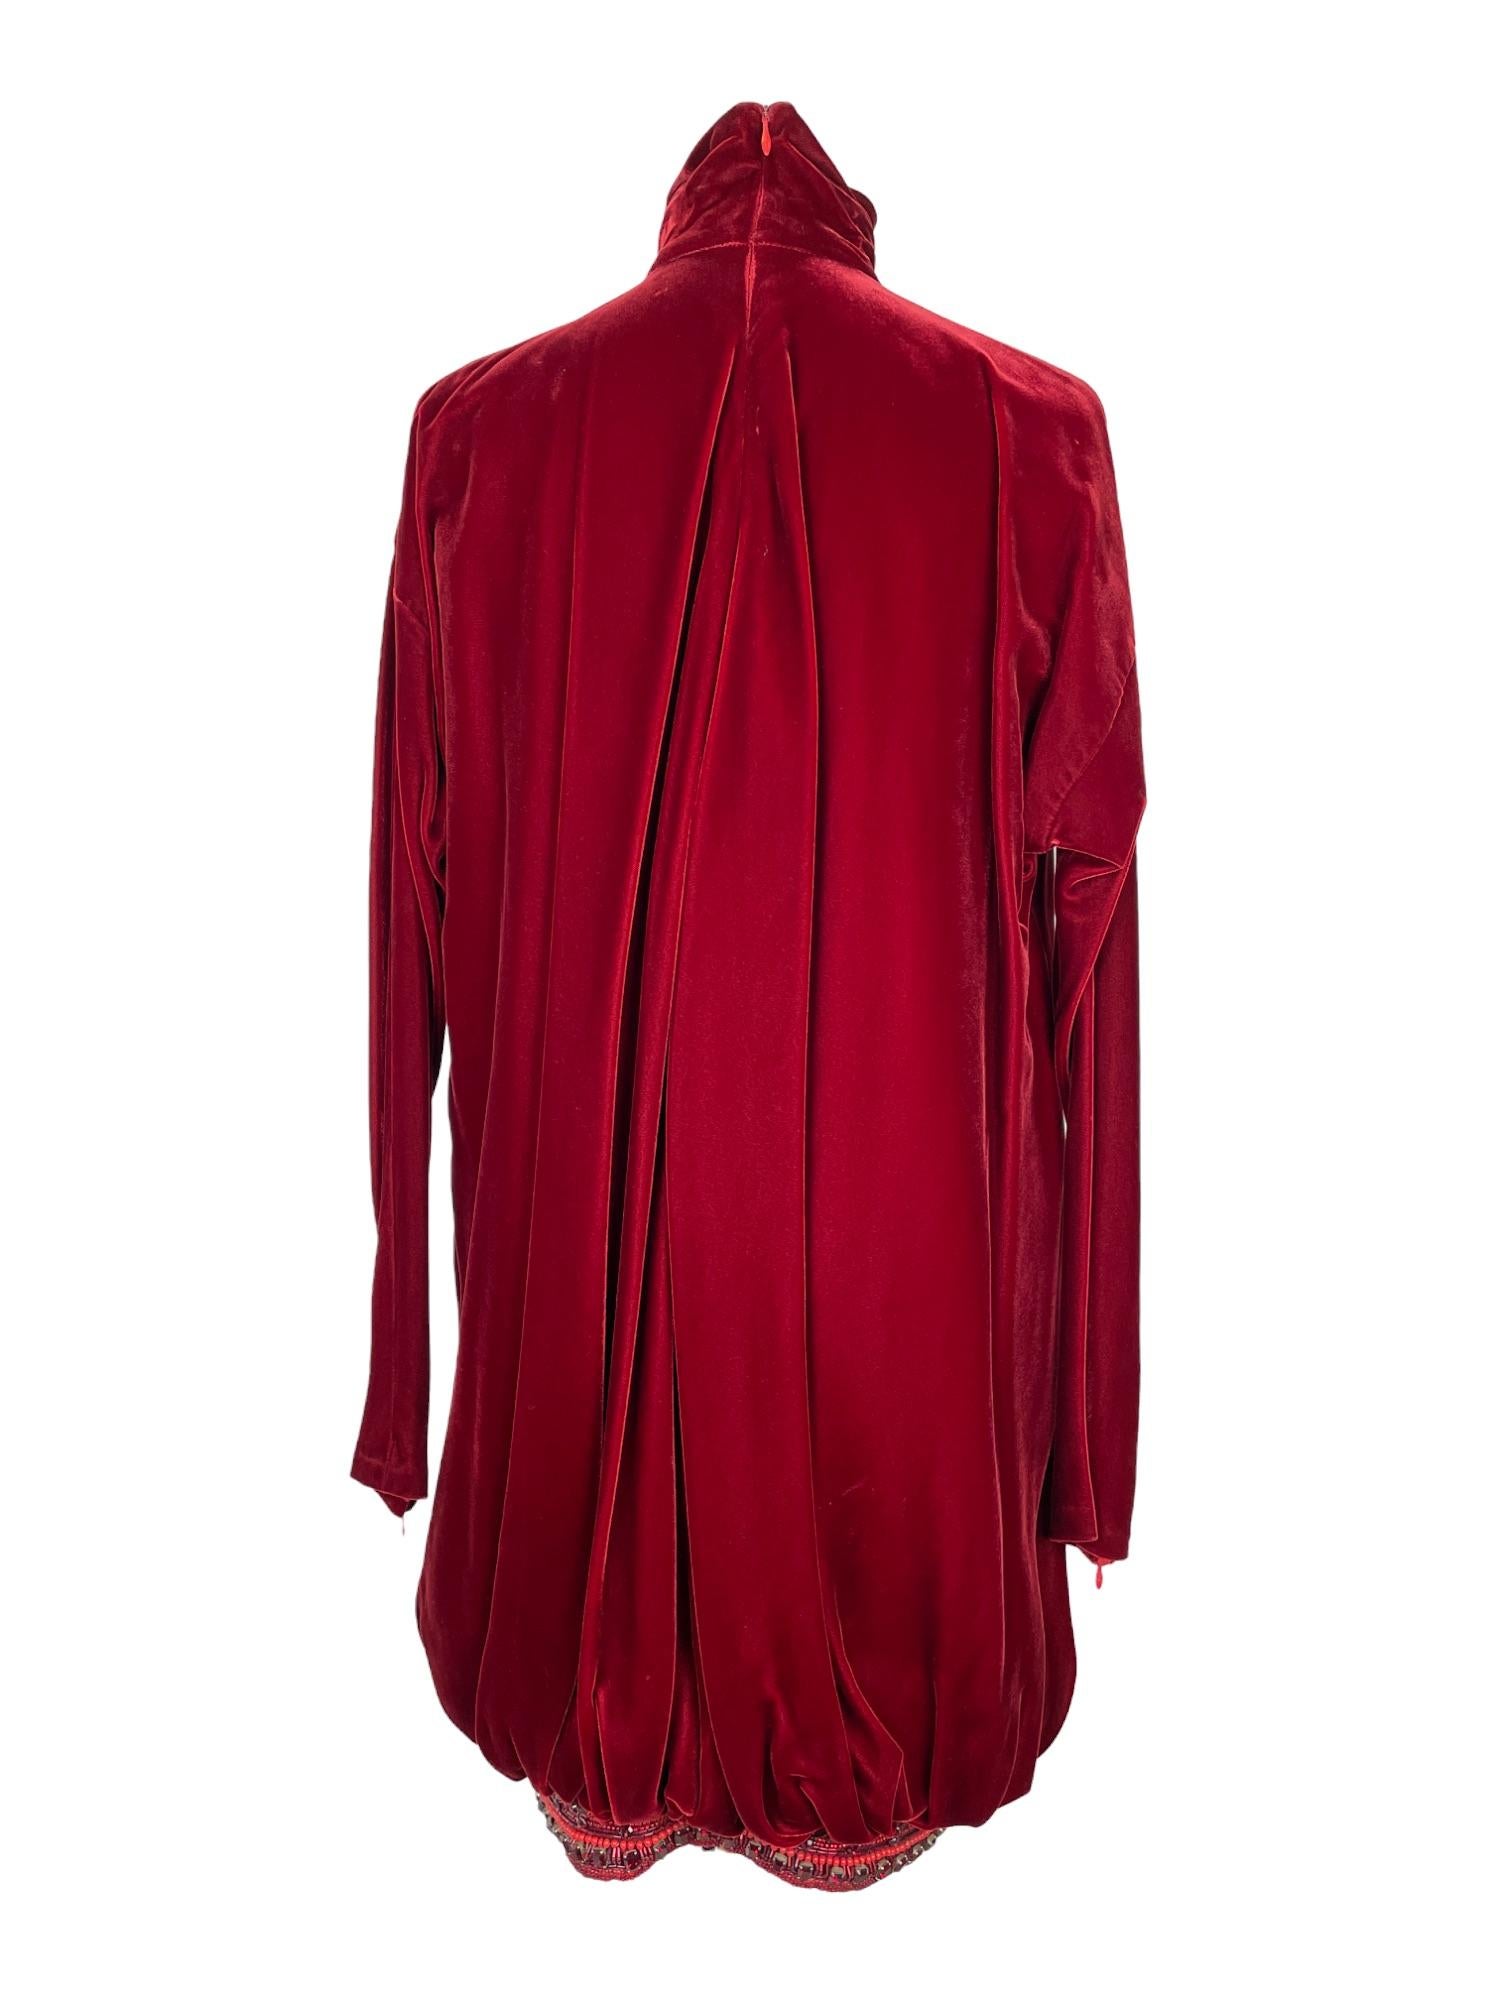 Rare Genny Red Velvet Dress with gems  For Sale 1